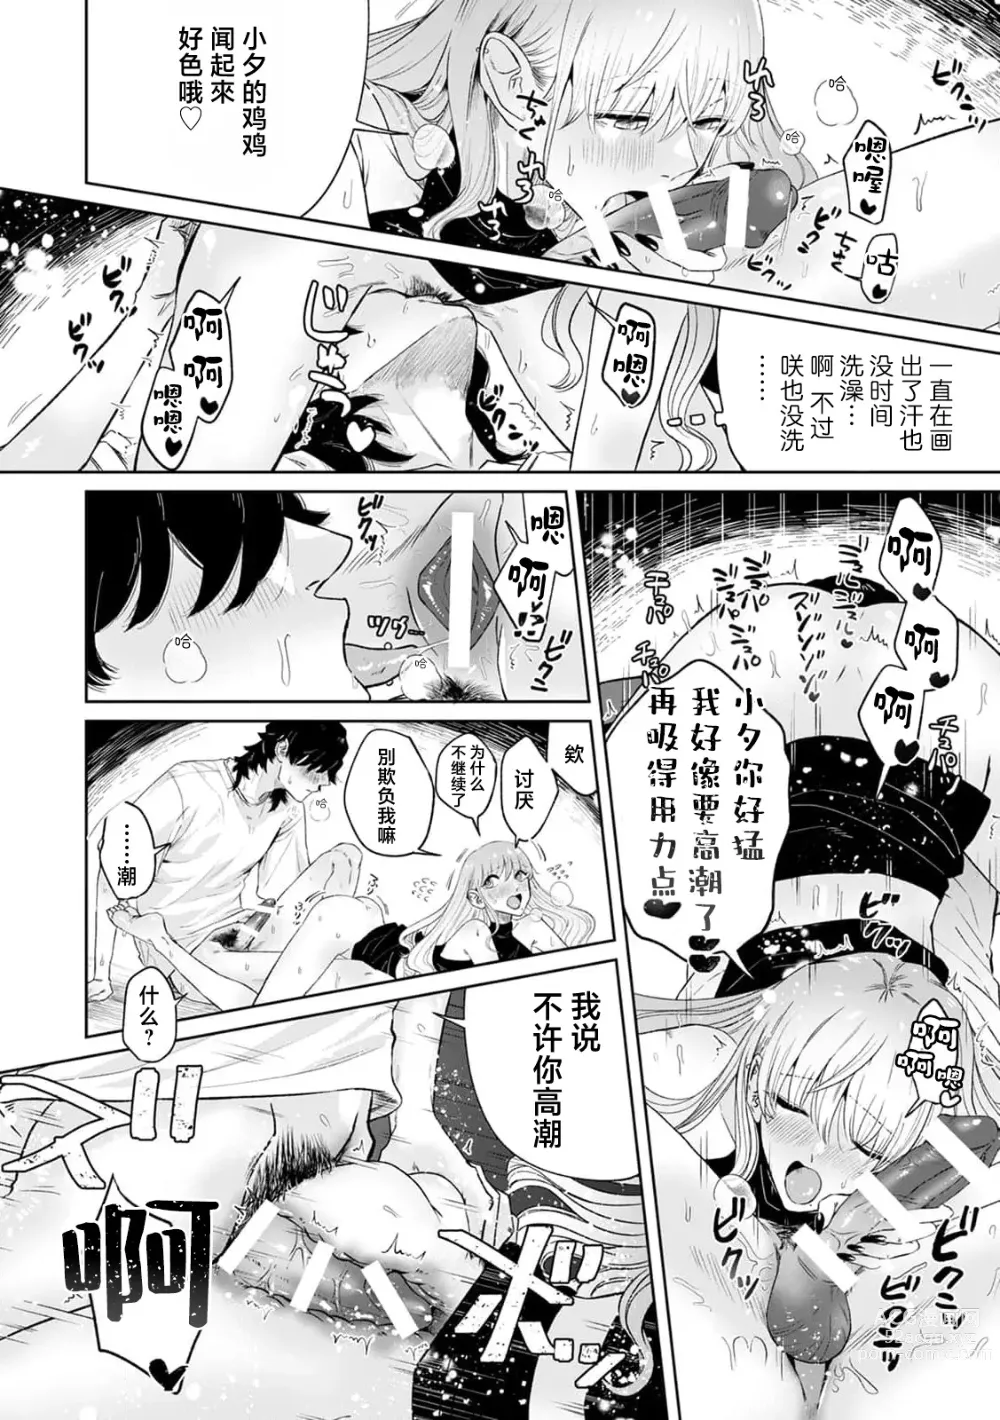 Page 5 of manga 你我二人、深陷发情之沼。